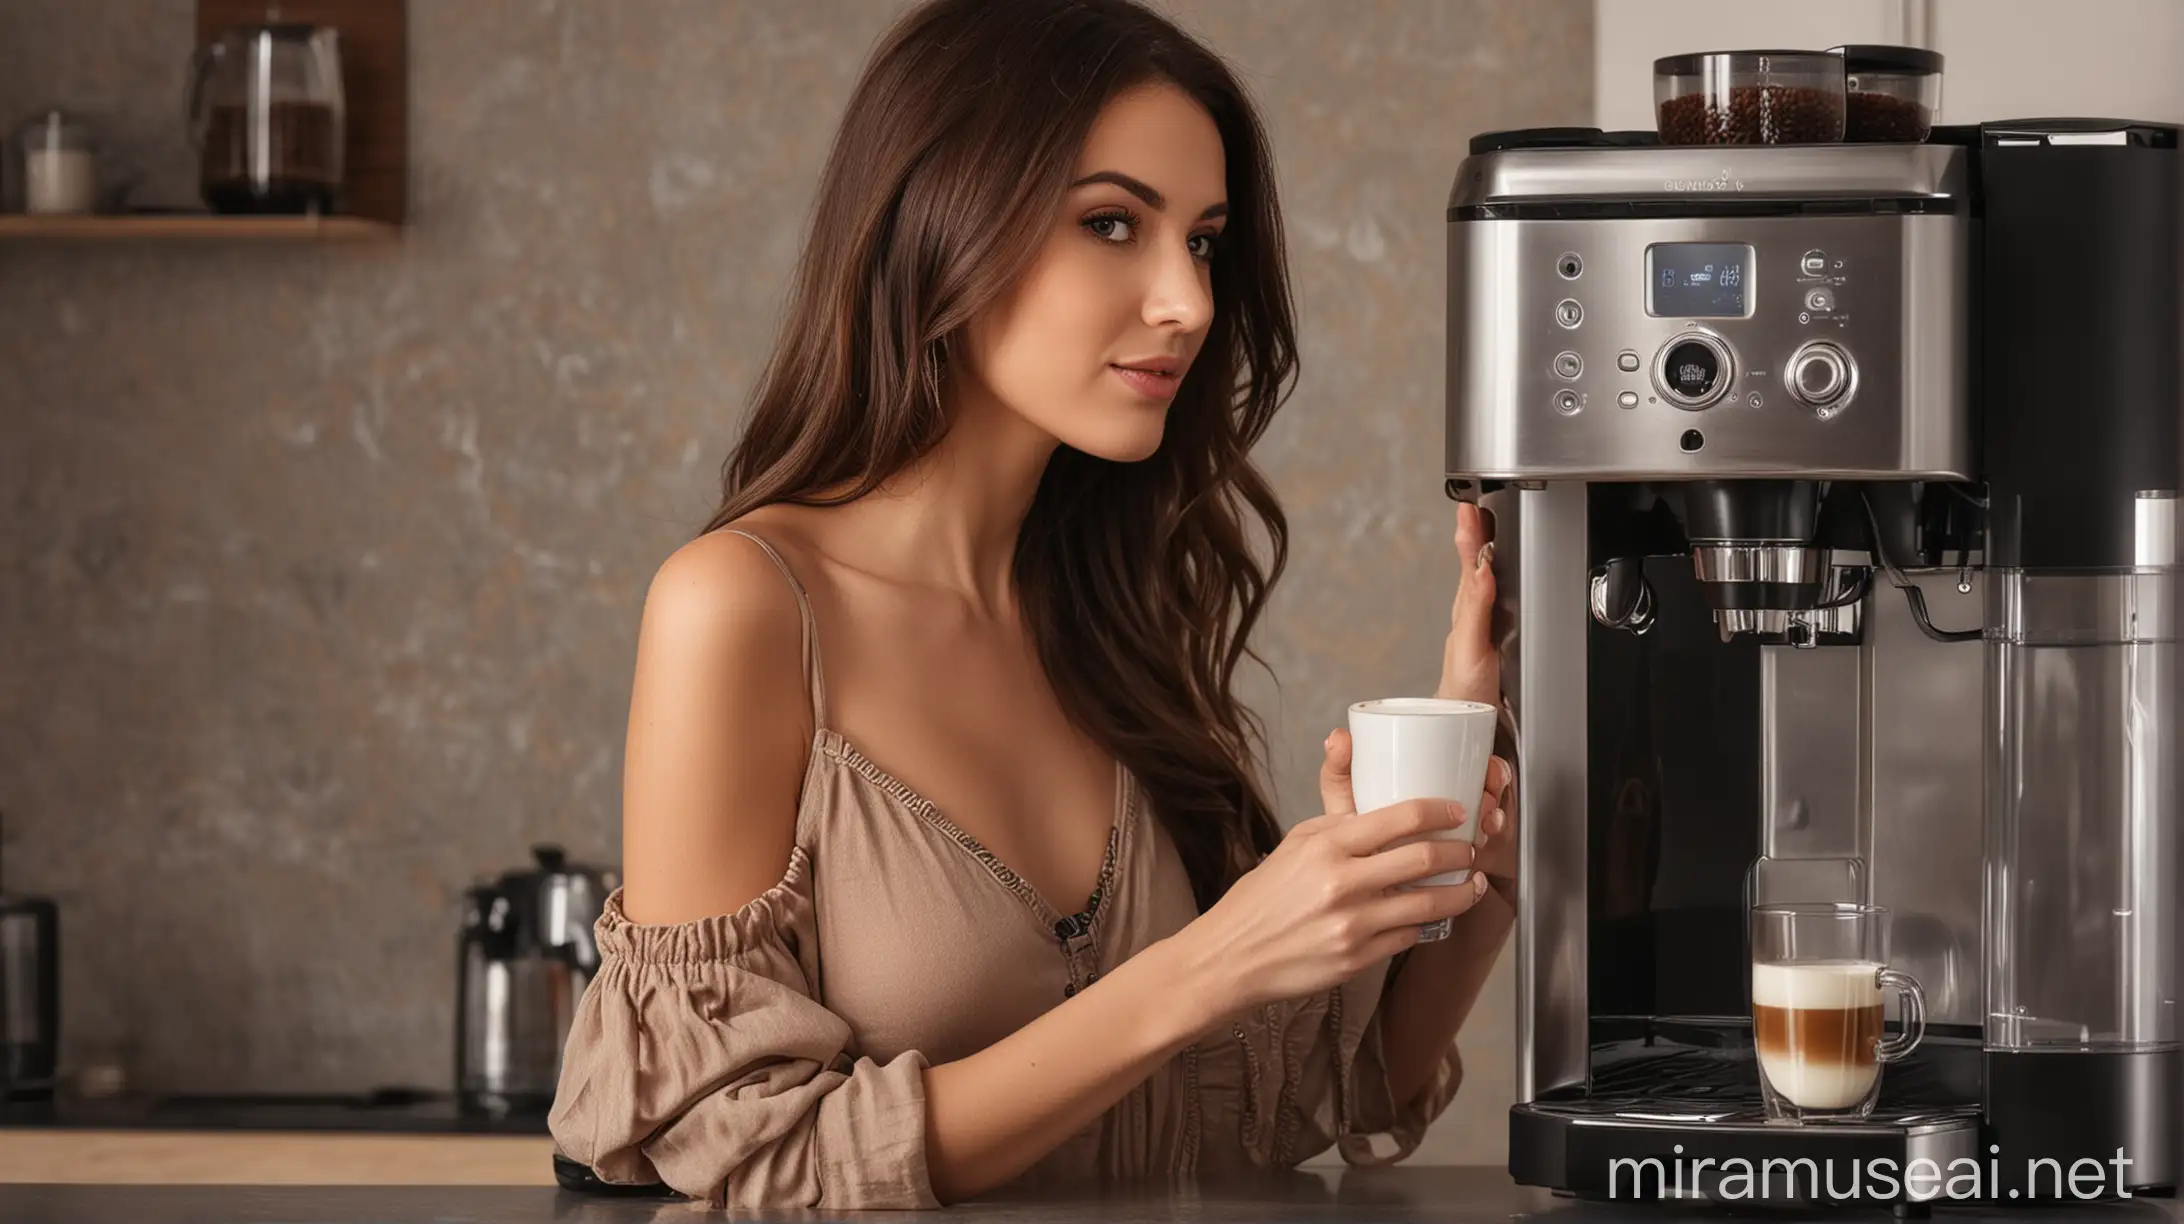 beutifull sexy woman coffee machine close to her